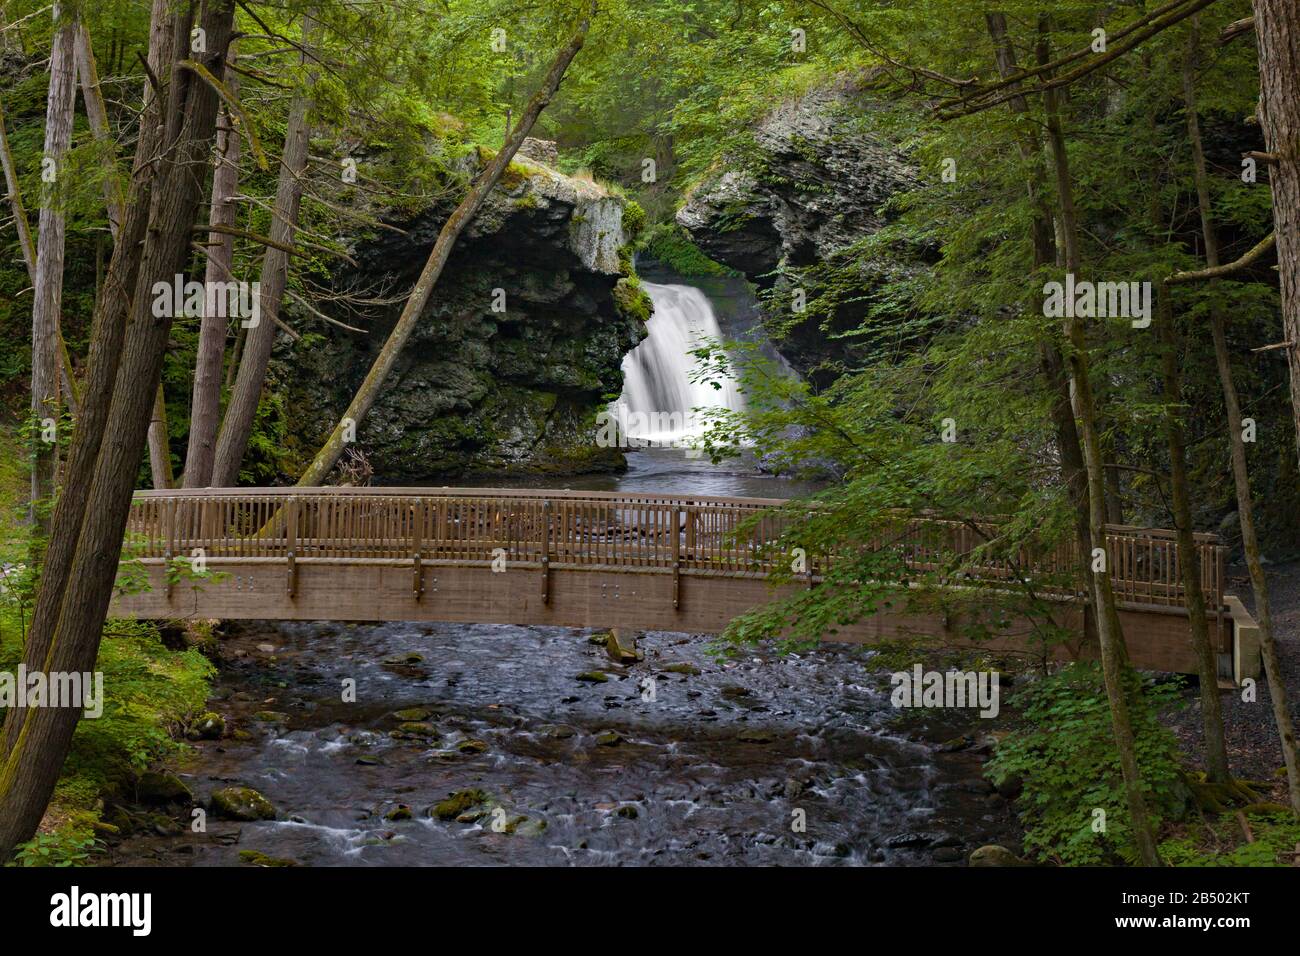 Marshall's Falls on Marshalls Creek in Pennsylvania’s Pocono Mountains flows through an eastern hemlock ravine. Stock Photo